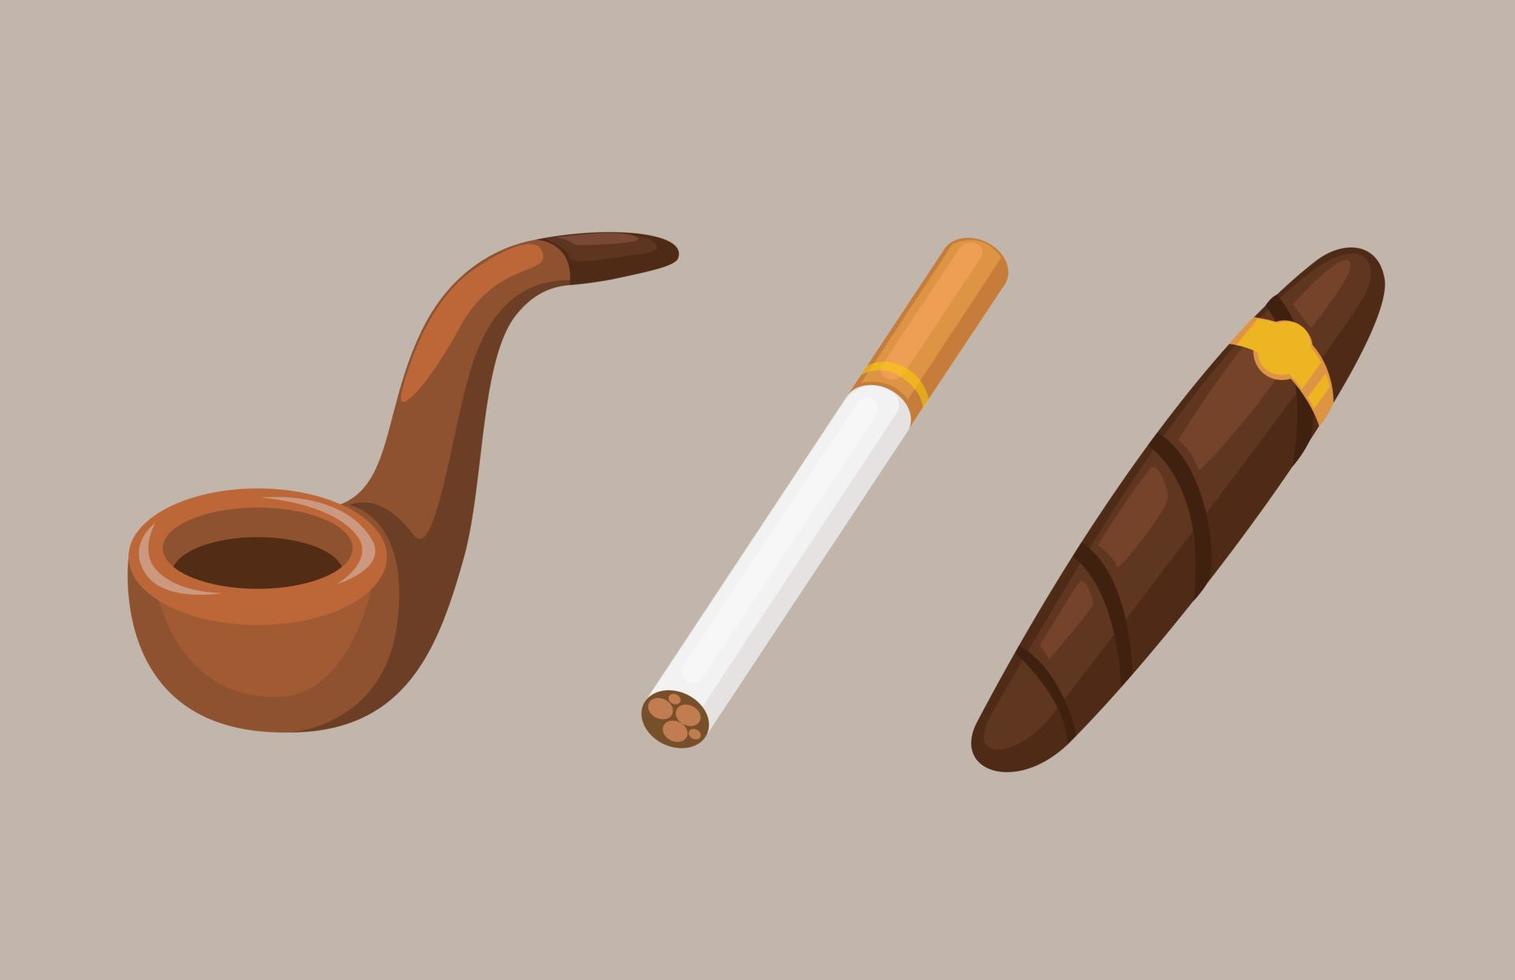 rauchen symbol objekt sammlung set illustration vektor